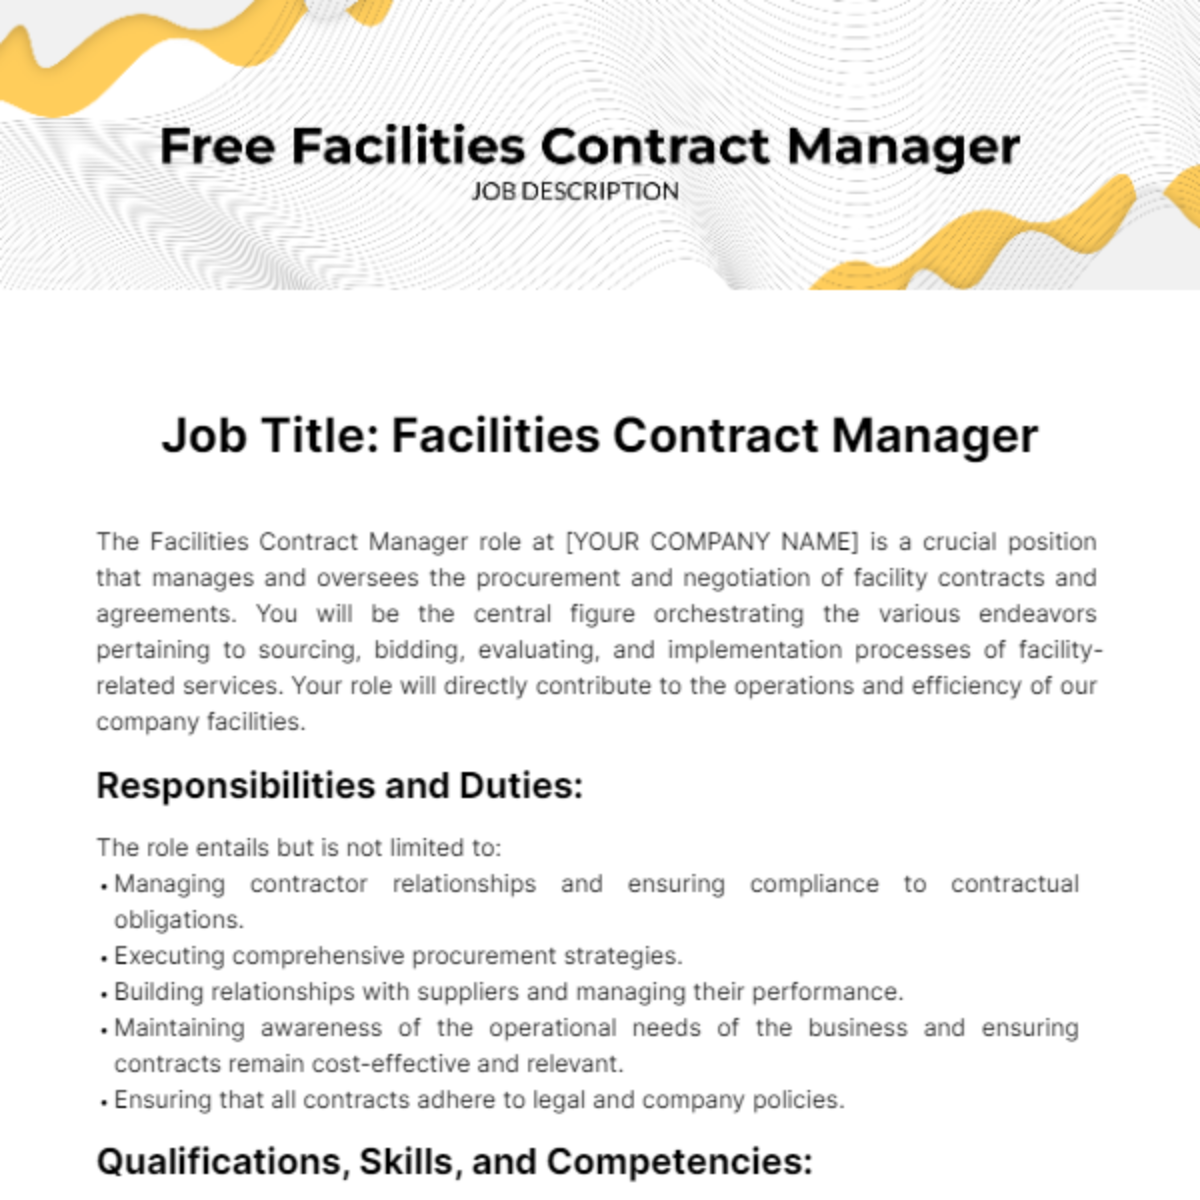 Free Facilities Contract Manager Job Description Template